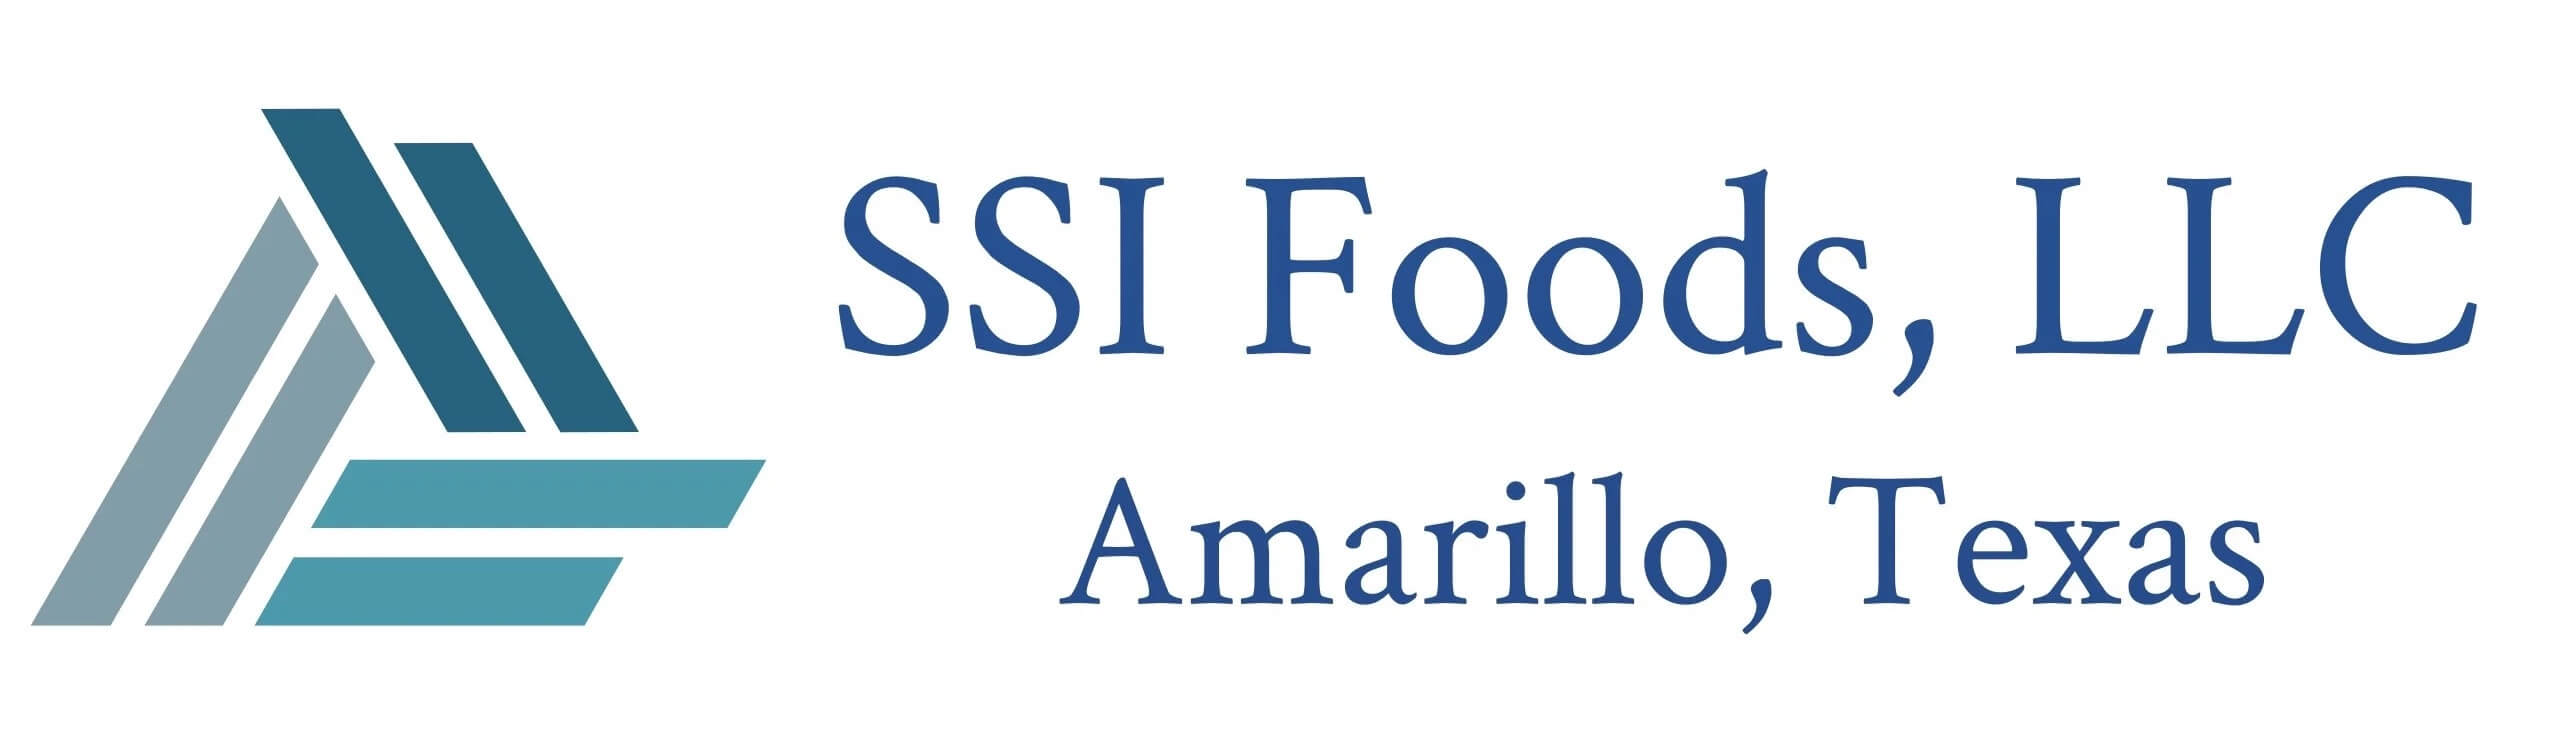 SSI foods, LLC amarillo tx logo